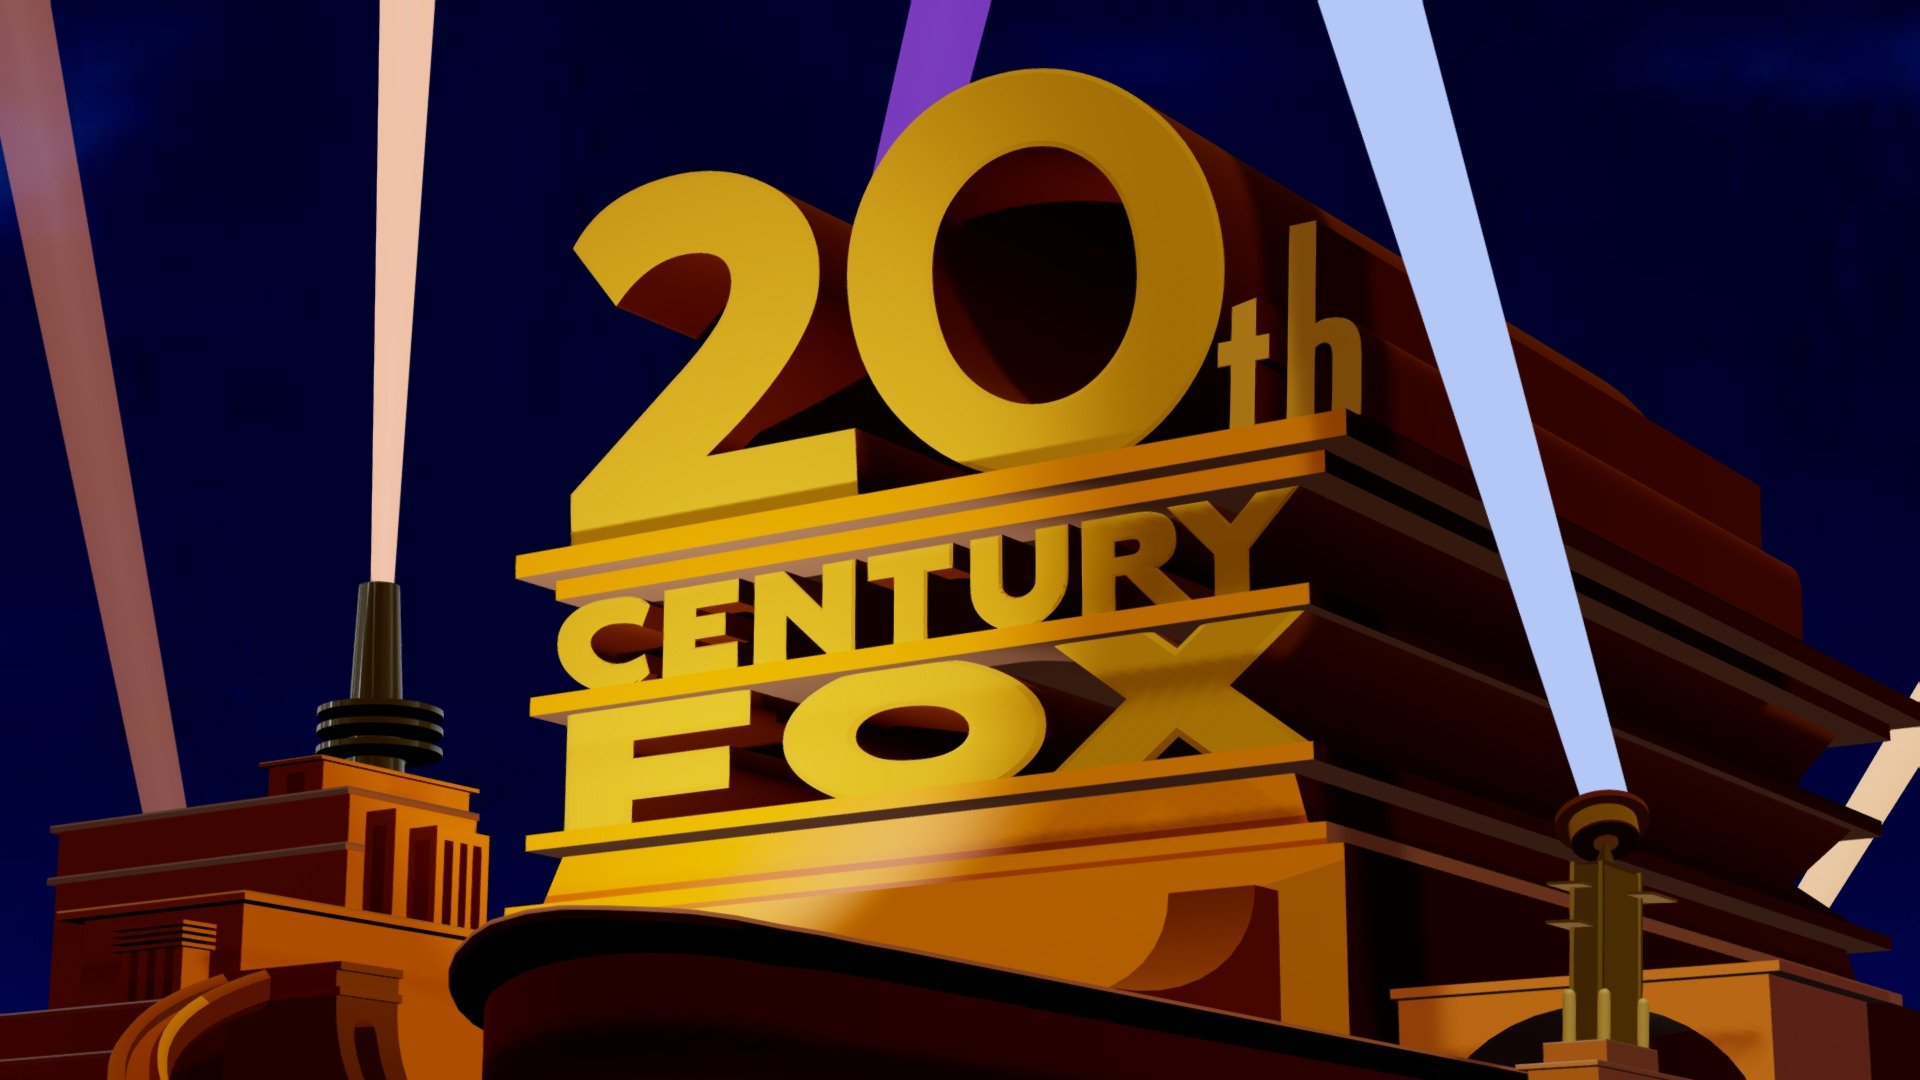 20th-century-fox-corporation-logo-1935-1975 (1) - Download Free 3D